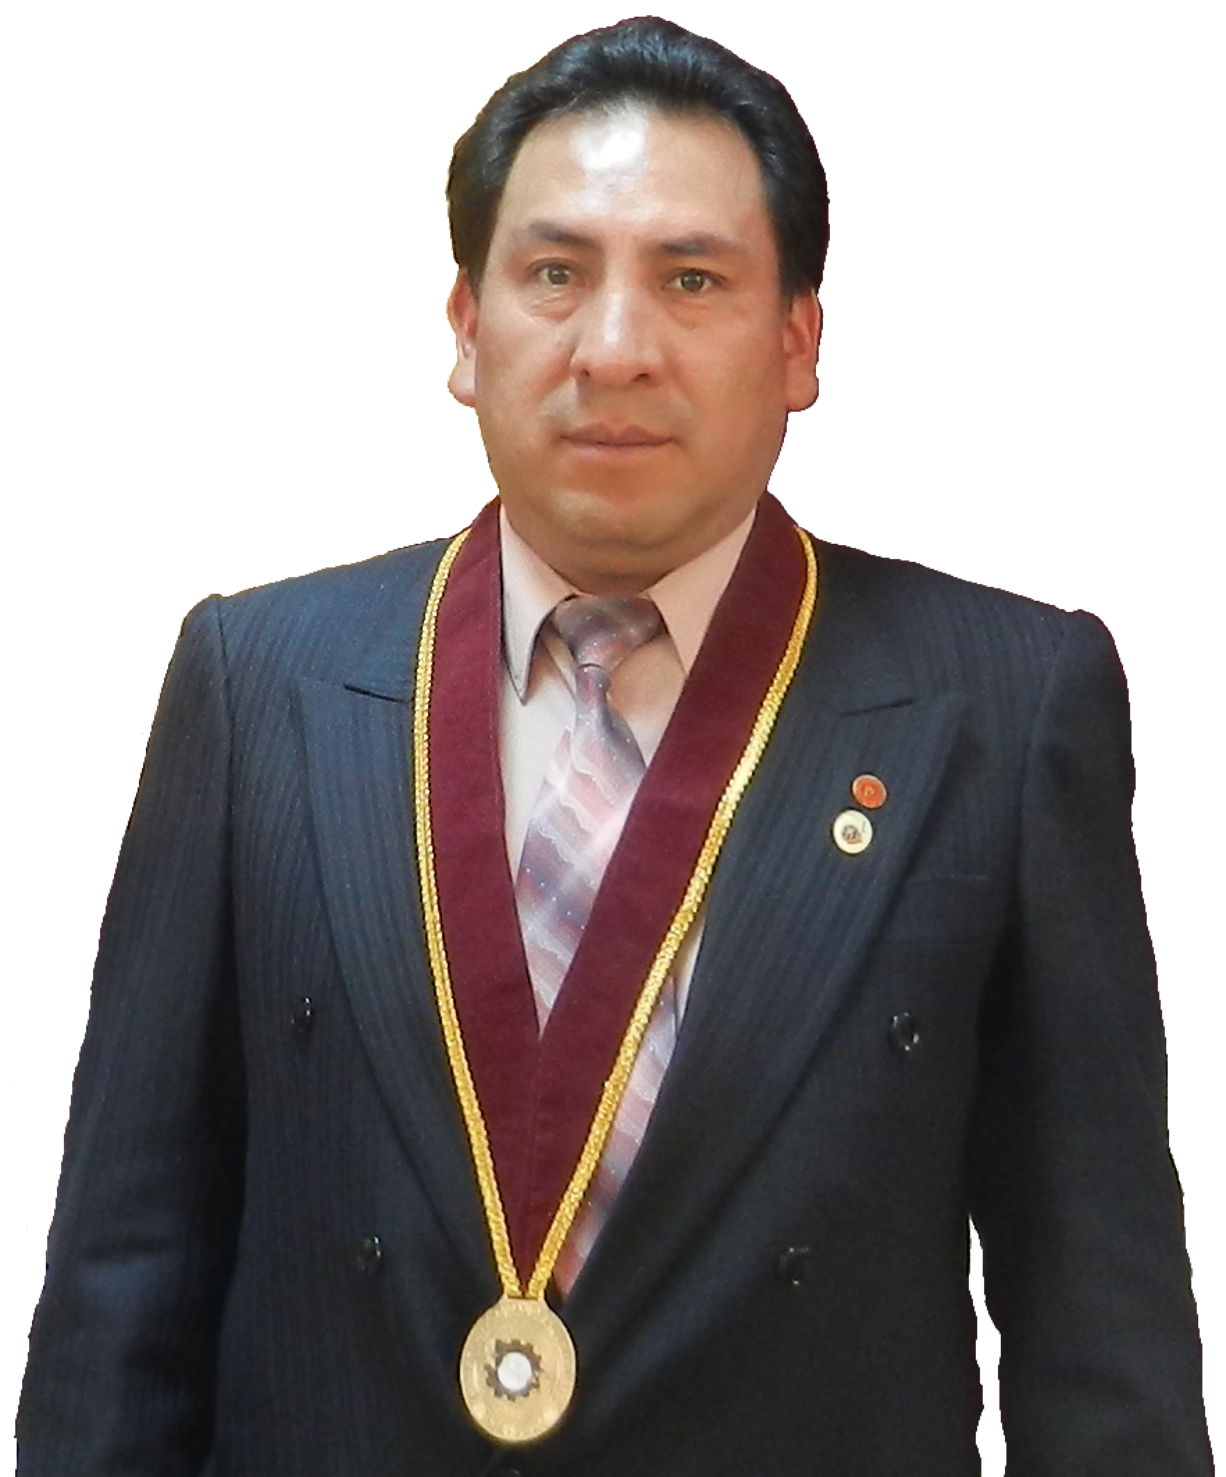 Guillermo Néstor Fernández Sila